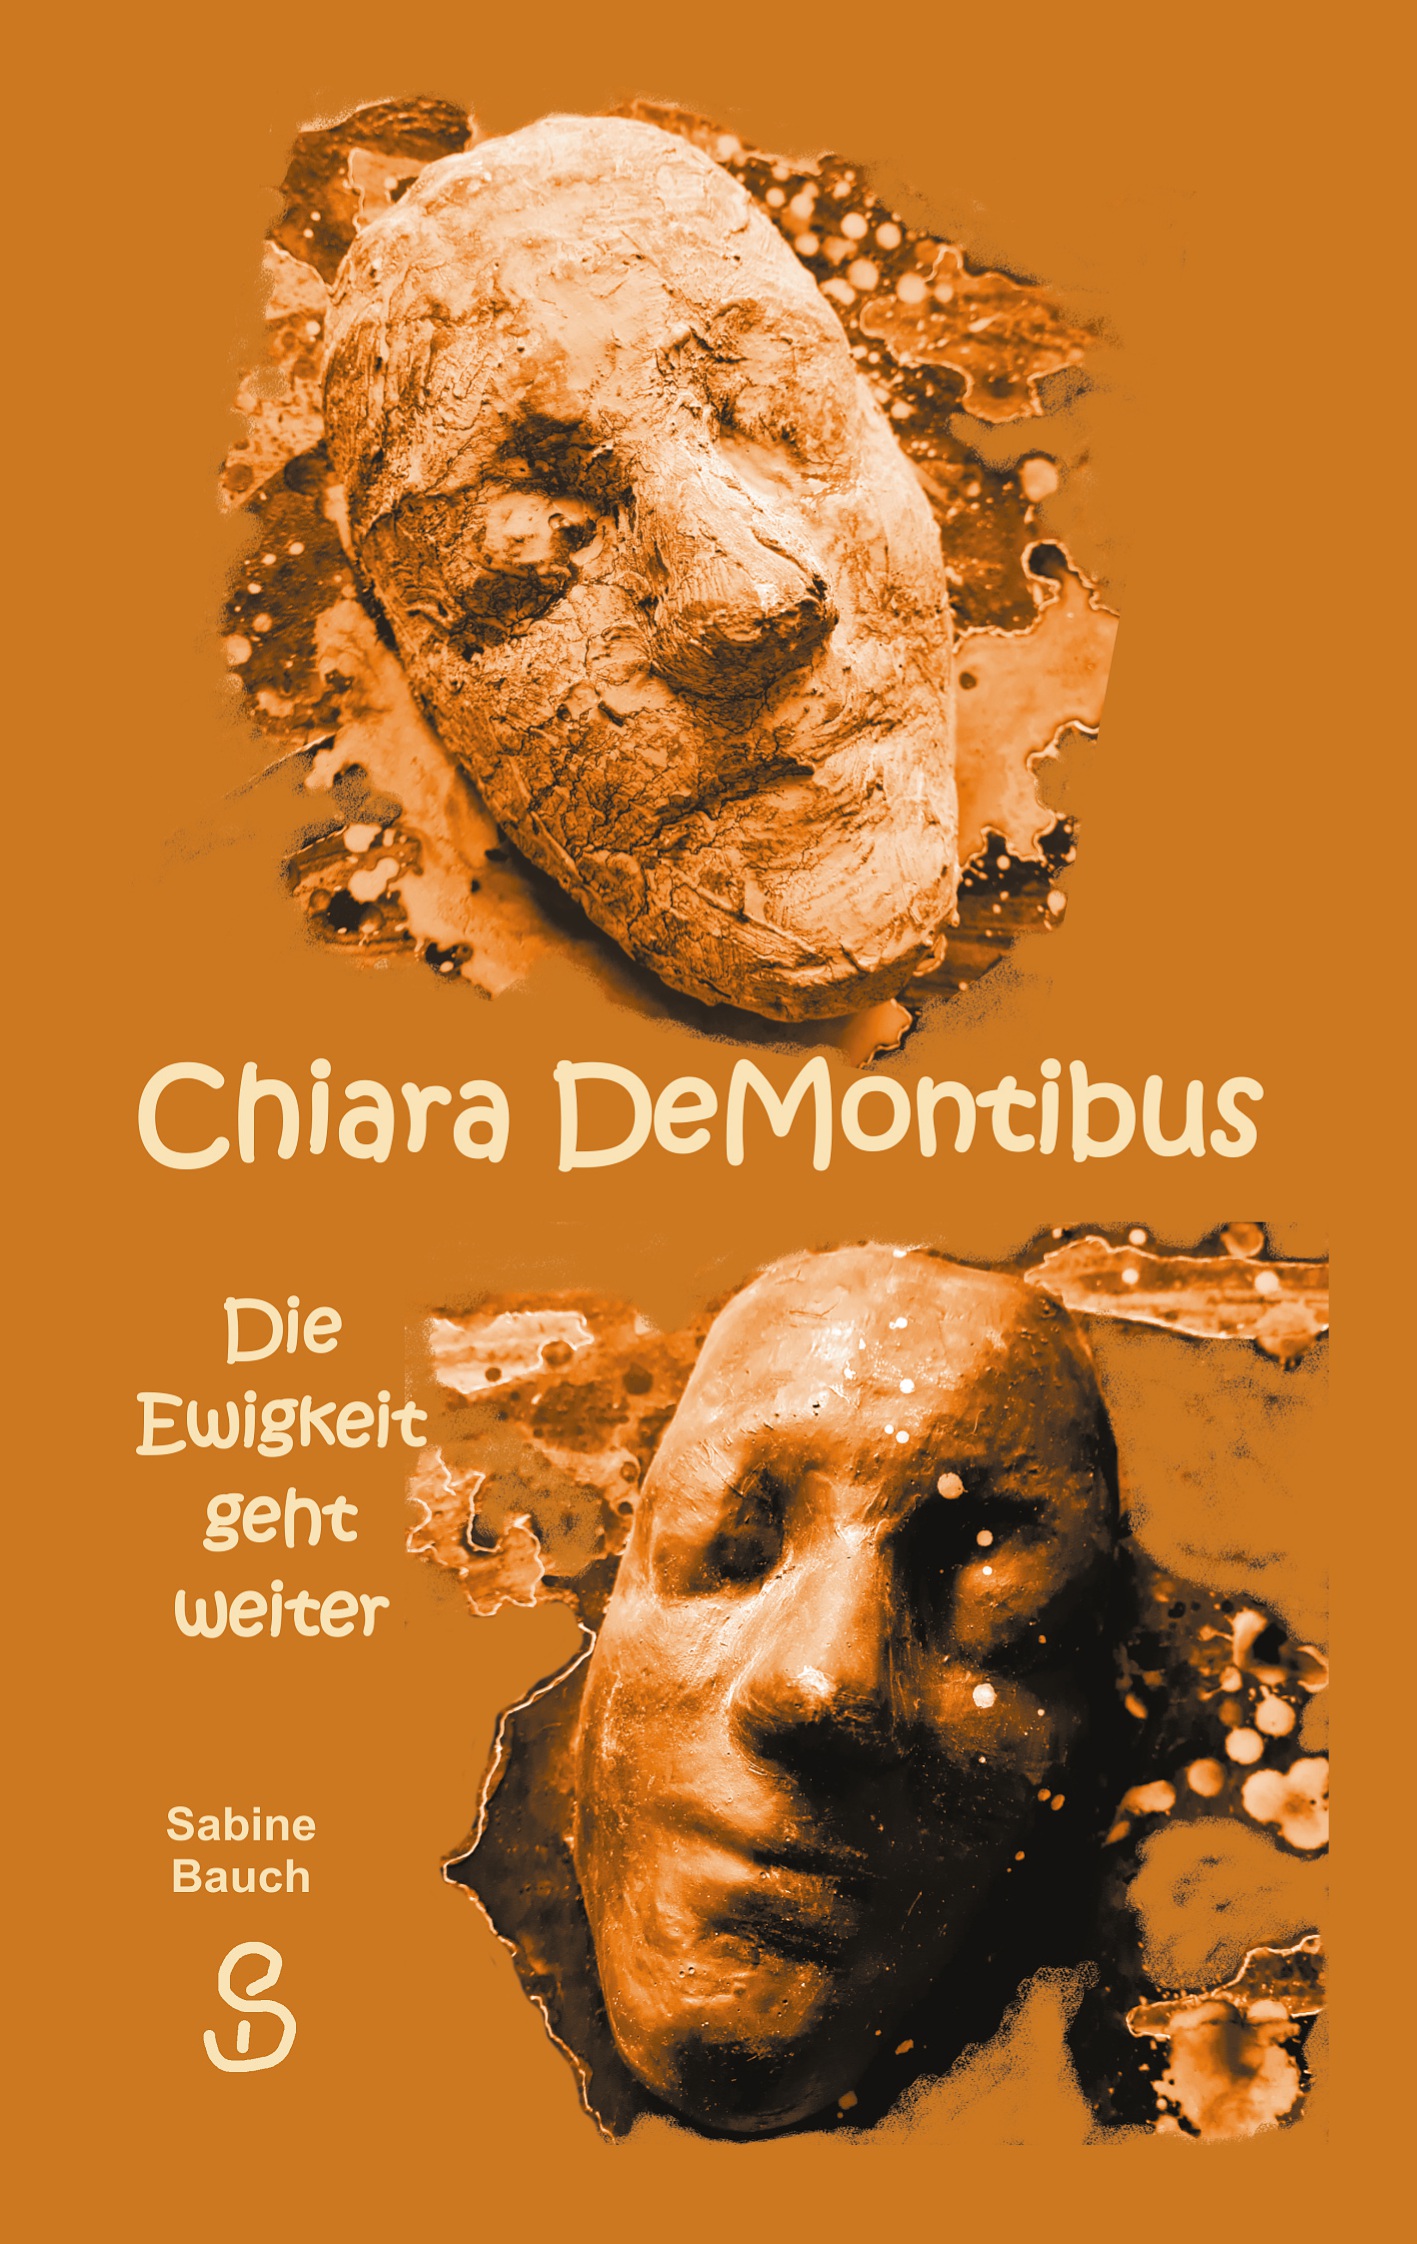 Chiara DeMontibus 2